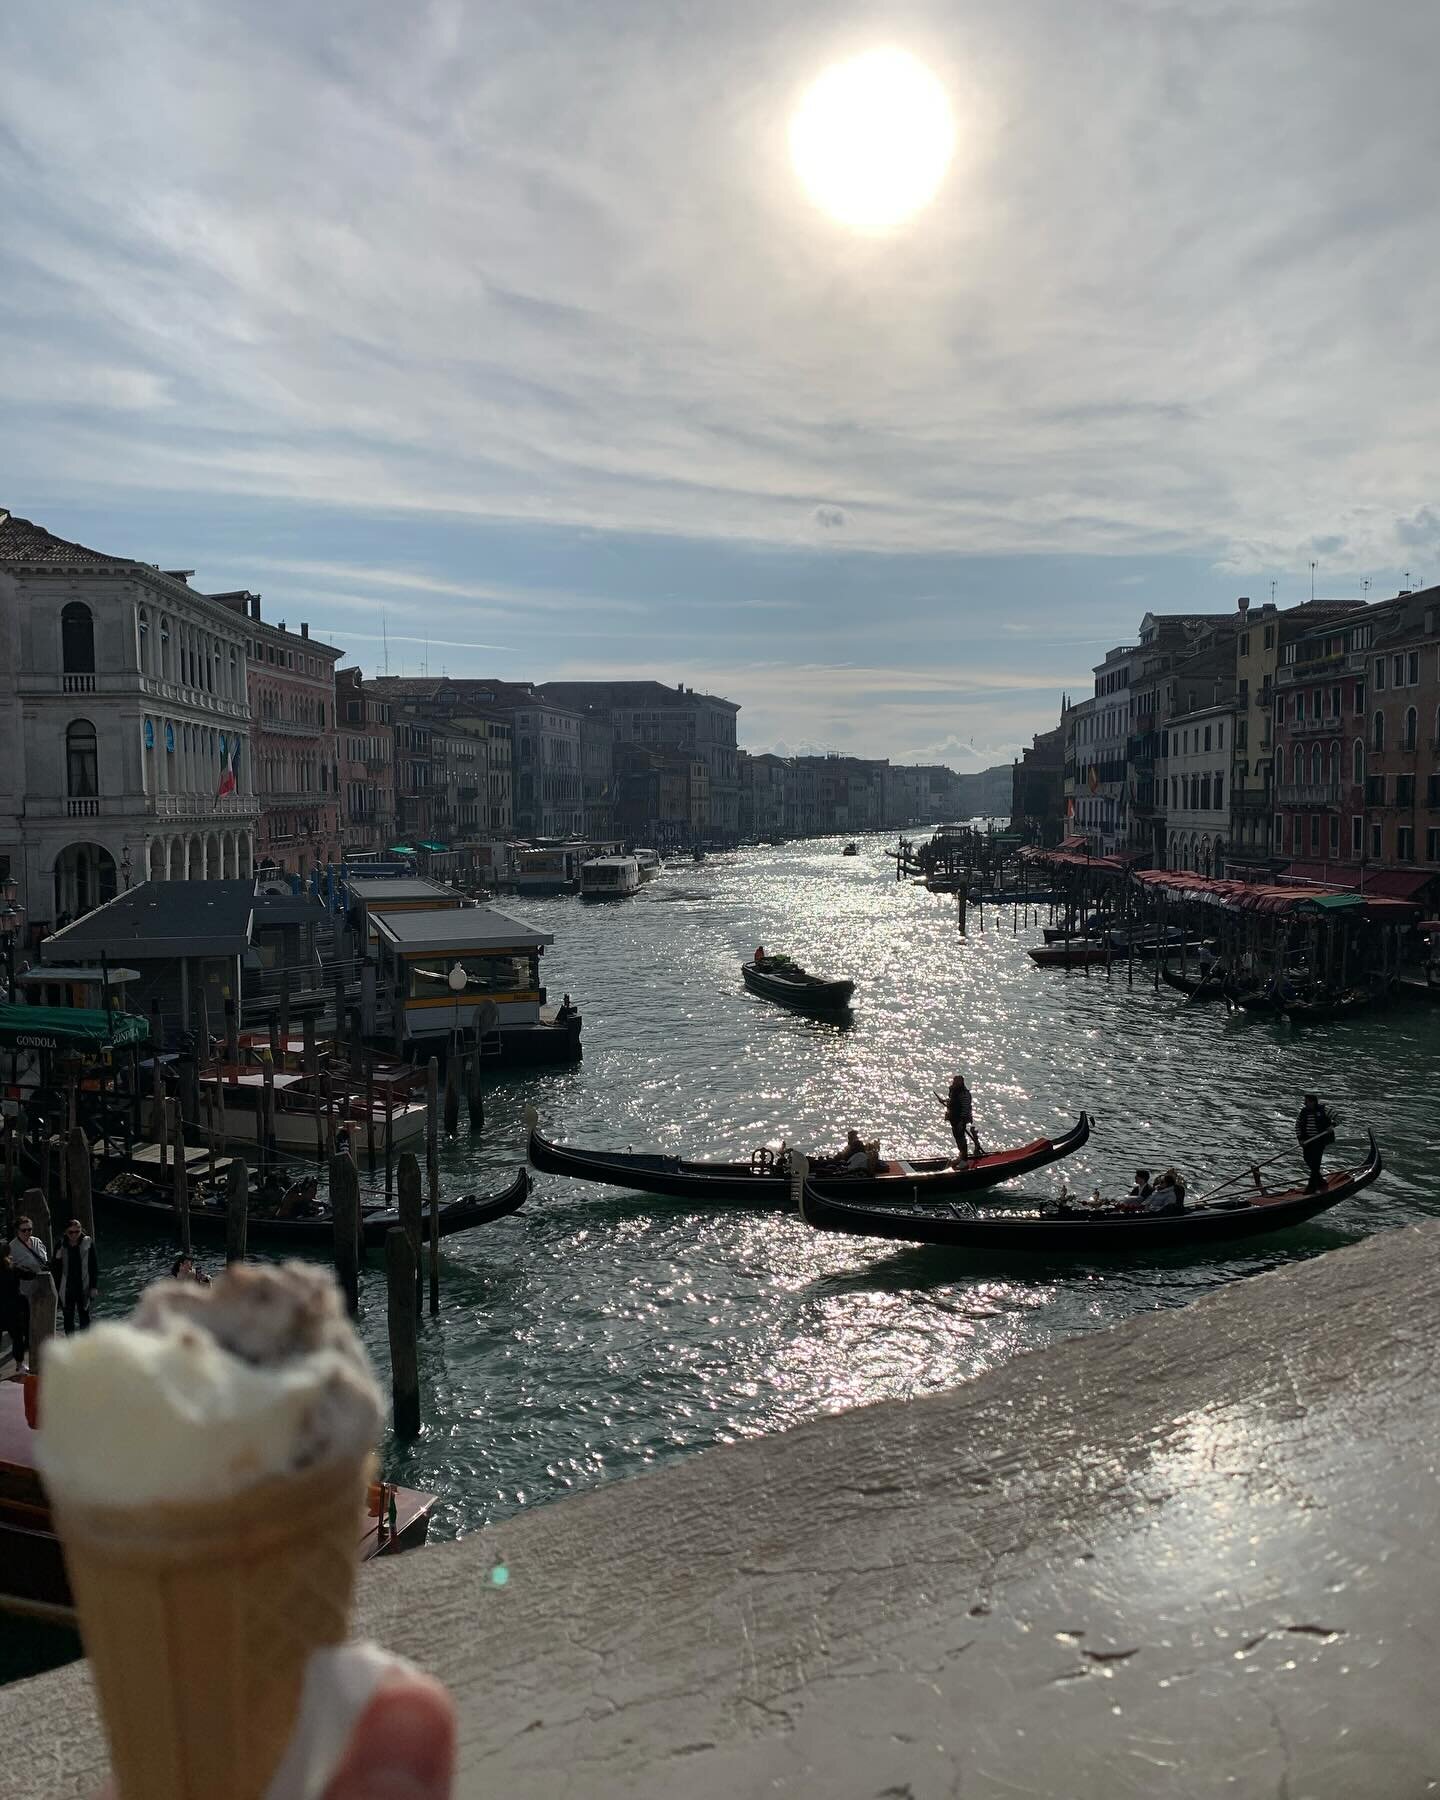 Son Tom enjoying his gelato in Venice ❤️❤️❤️